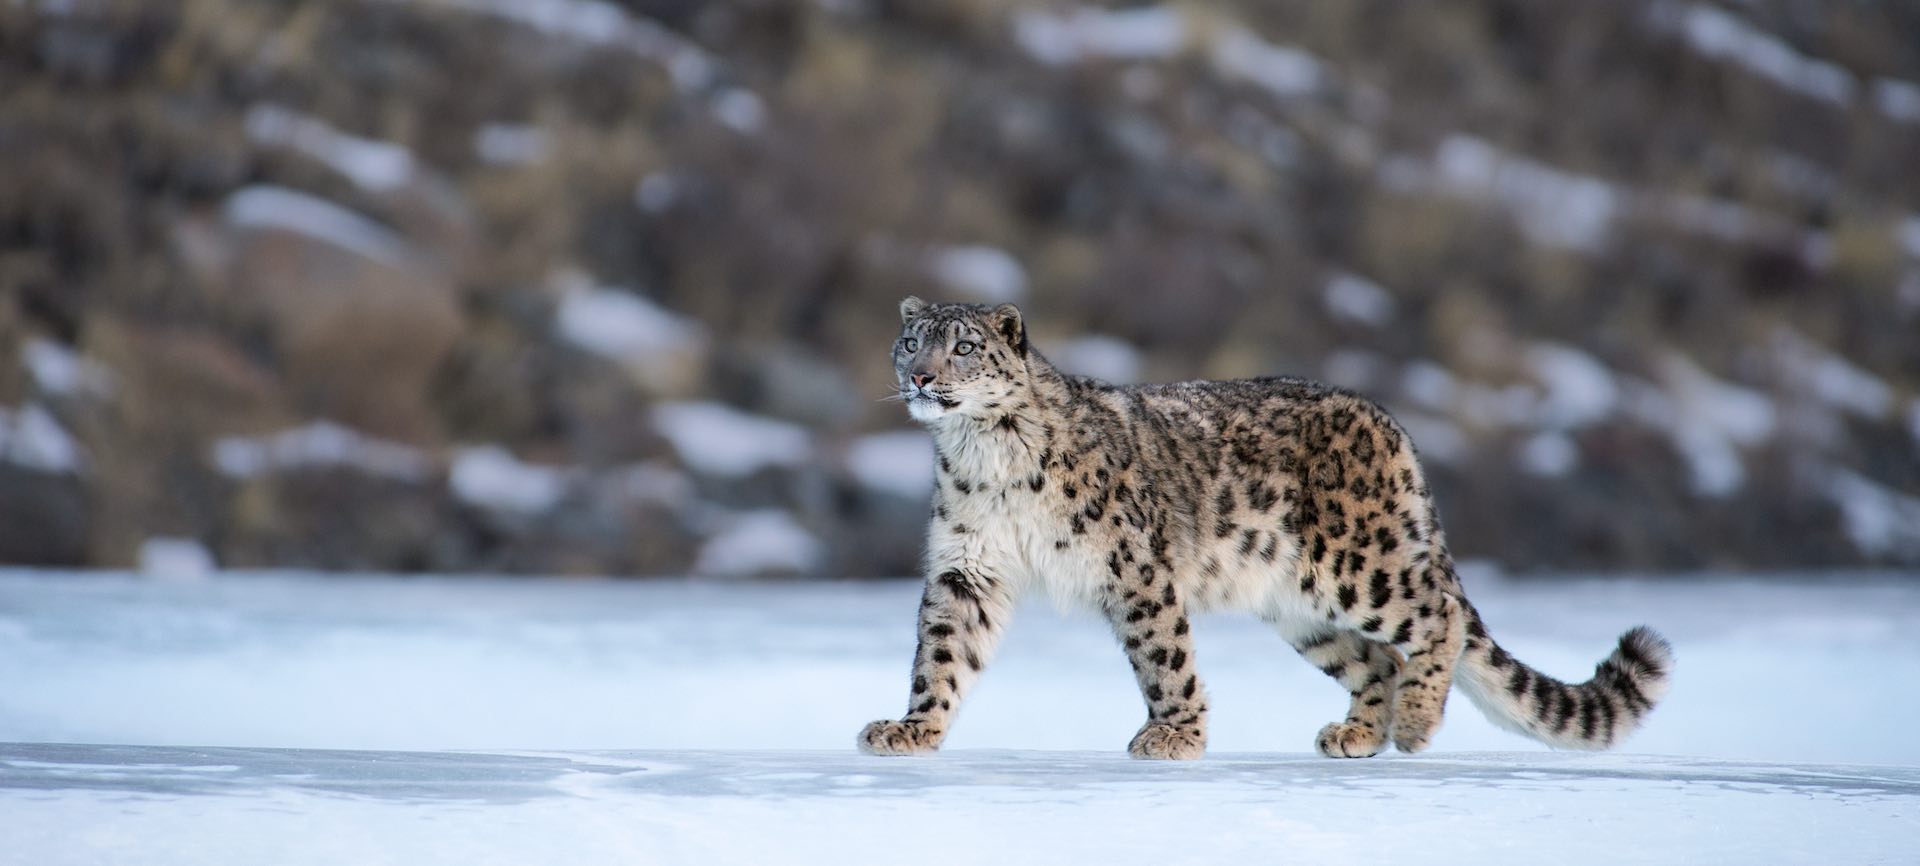 Snow leopard (Uncia uncia) Altai Mountains, Mongolia. March.